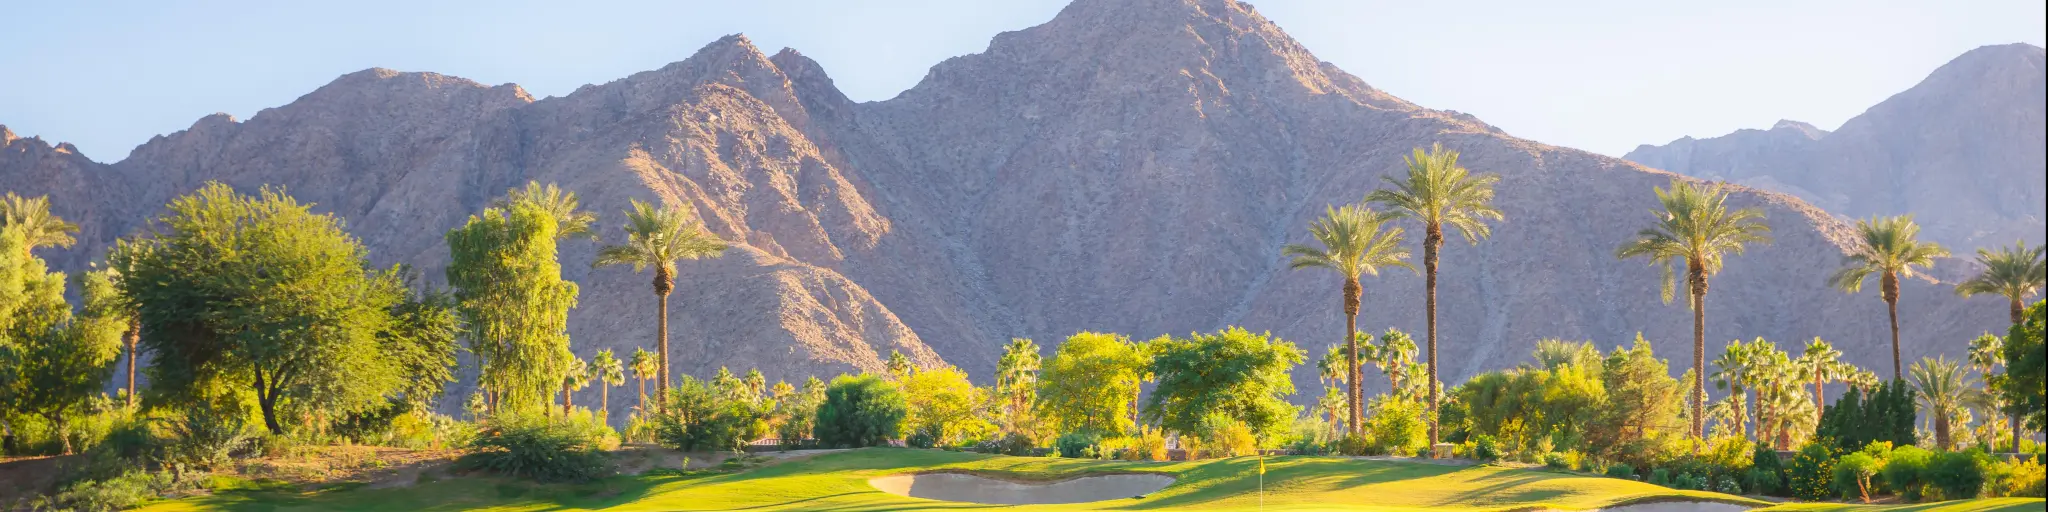 Palm Springs, California, USA with a beautiful golden light over Indian Wells Golf Resort, a desert golf course in Palm Springs, California, USA with view of the San Bernardino Mountains.